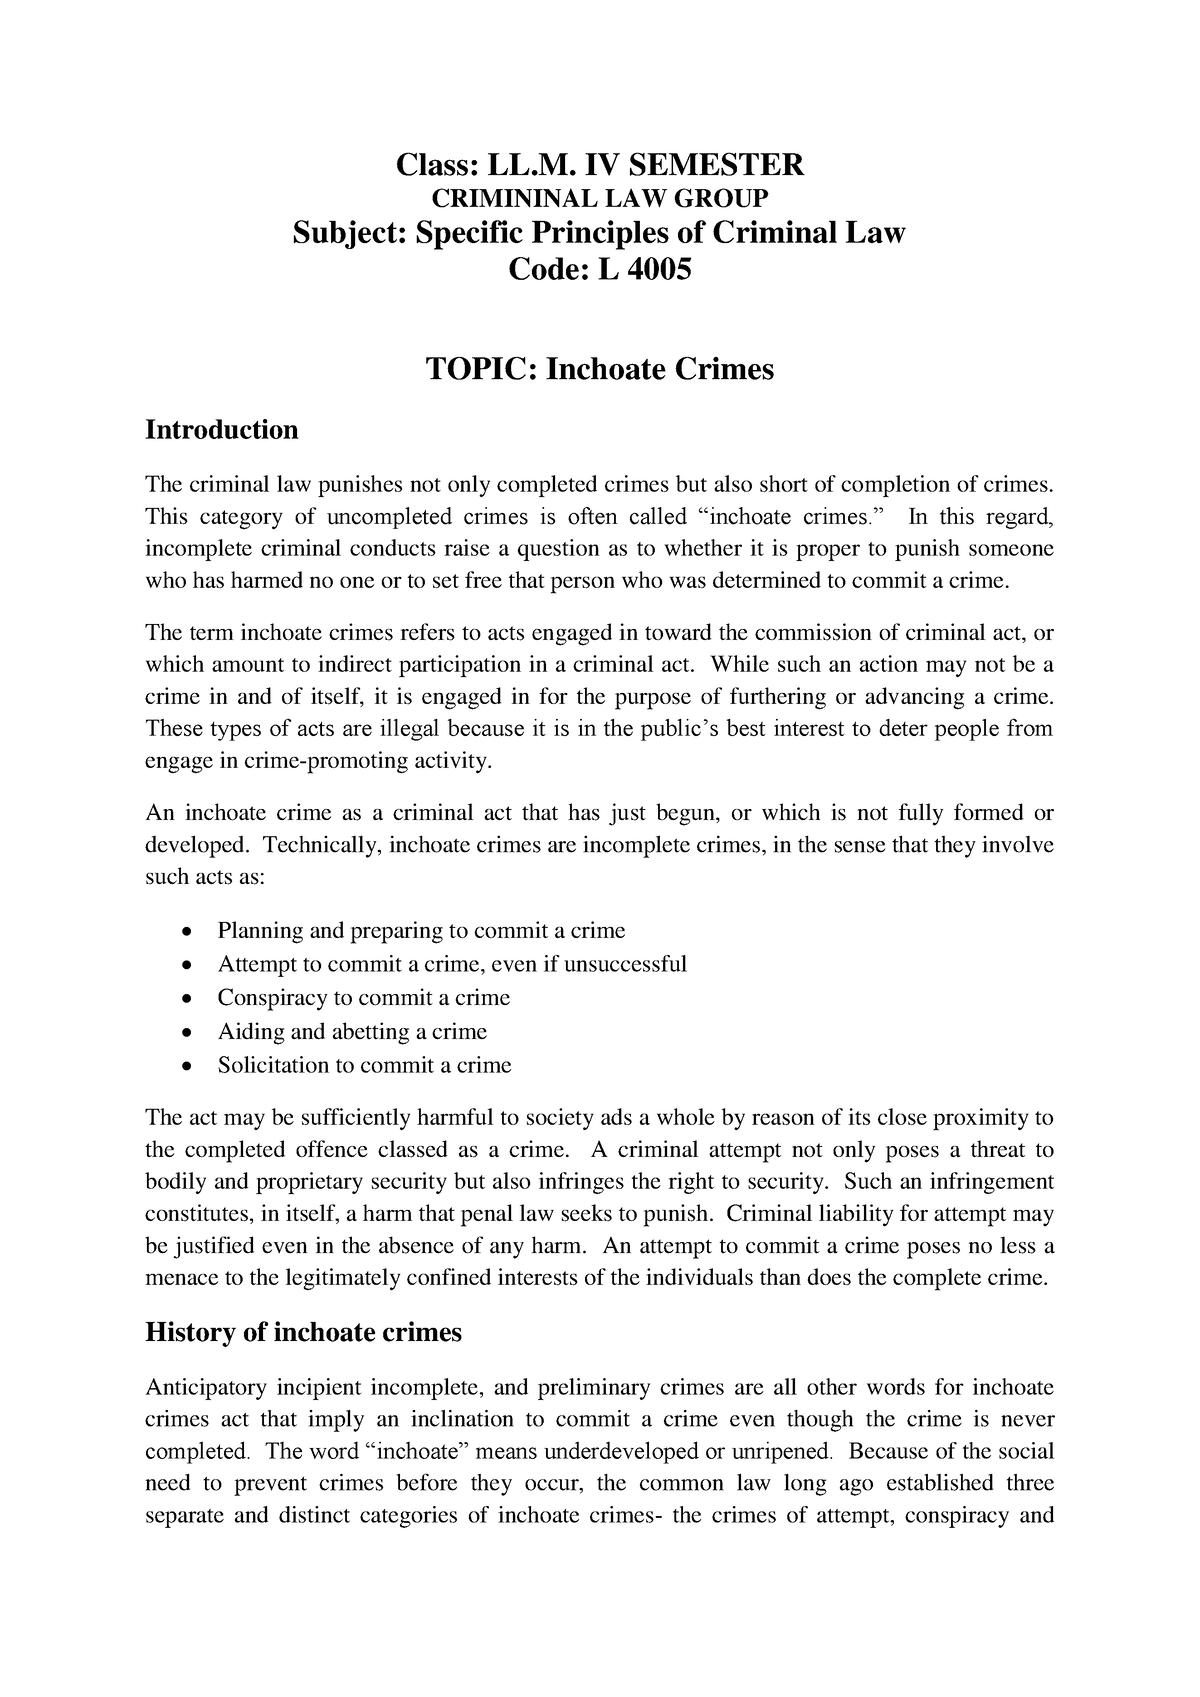 LLM 1805 IV SEM Specific Principles of Criminal Law L 4005 lecture on ...